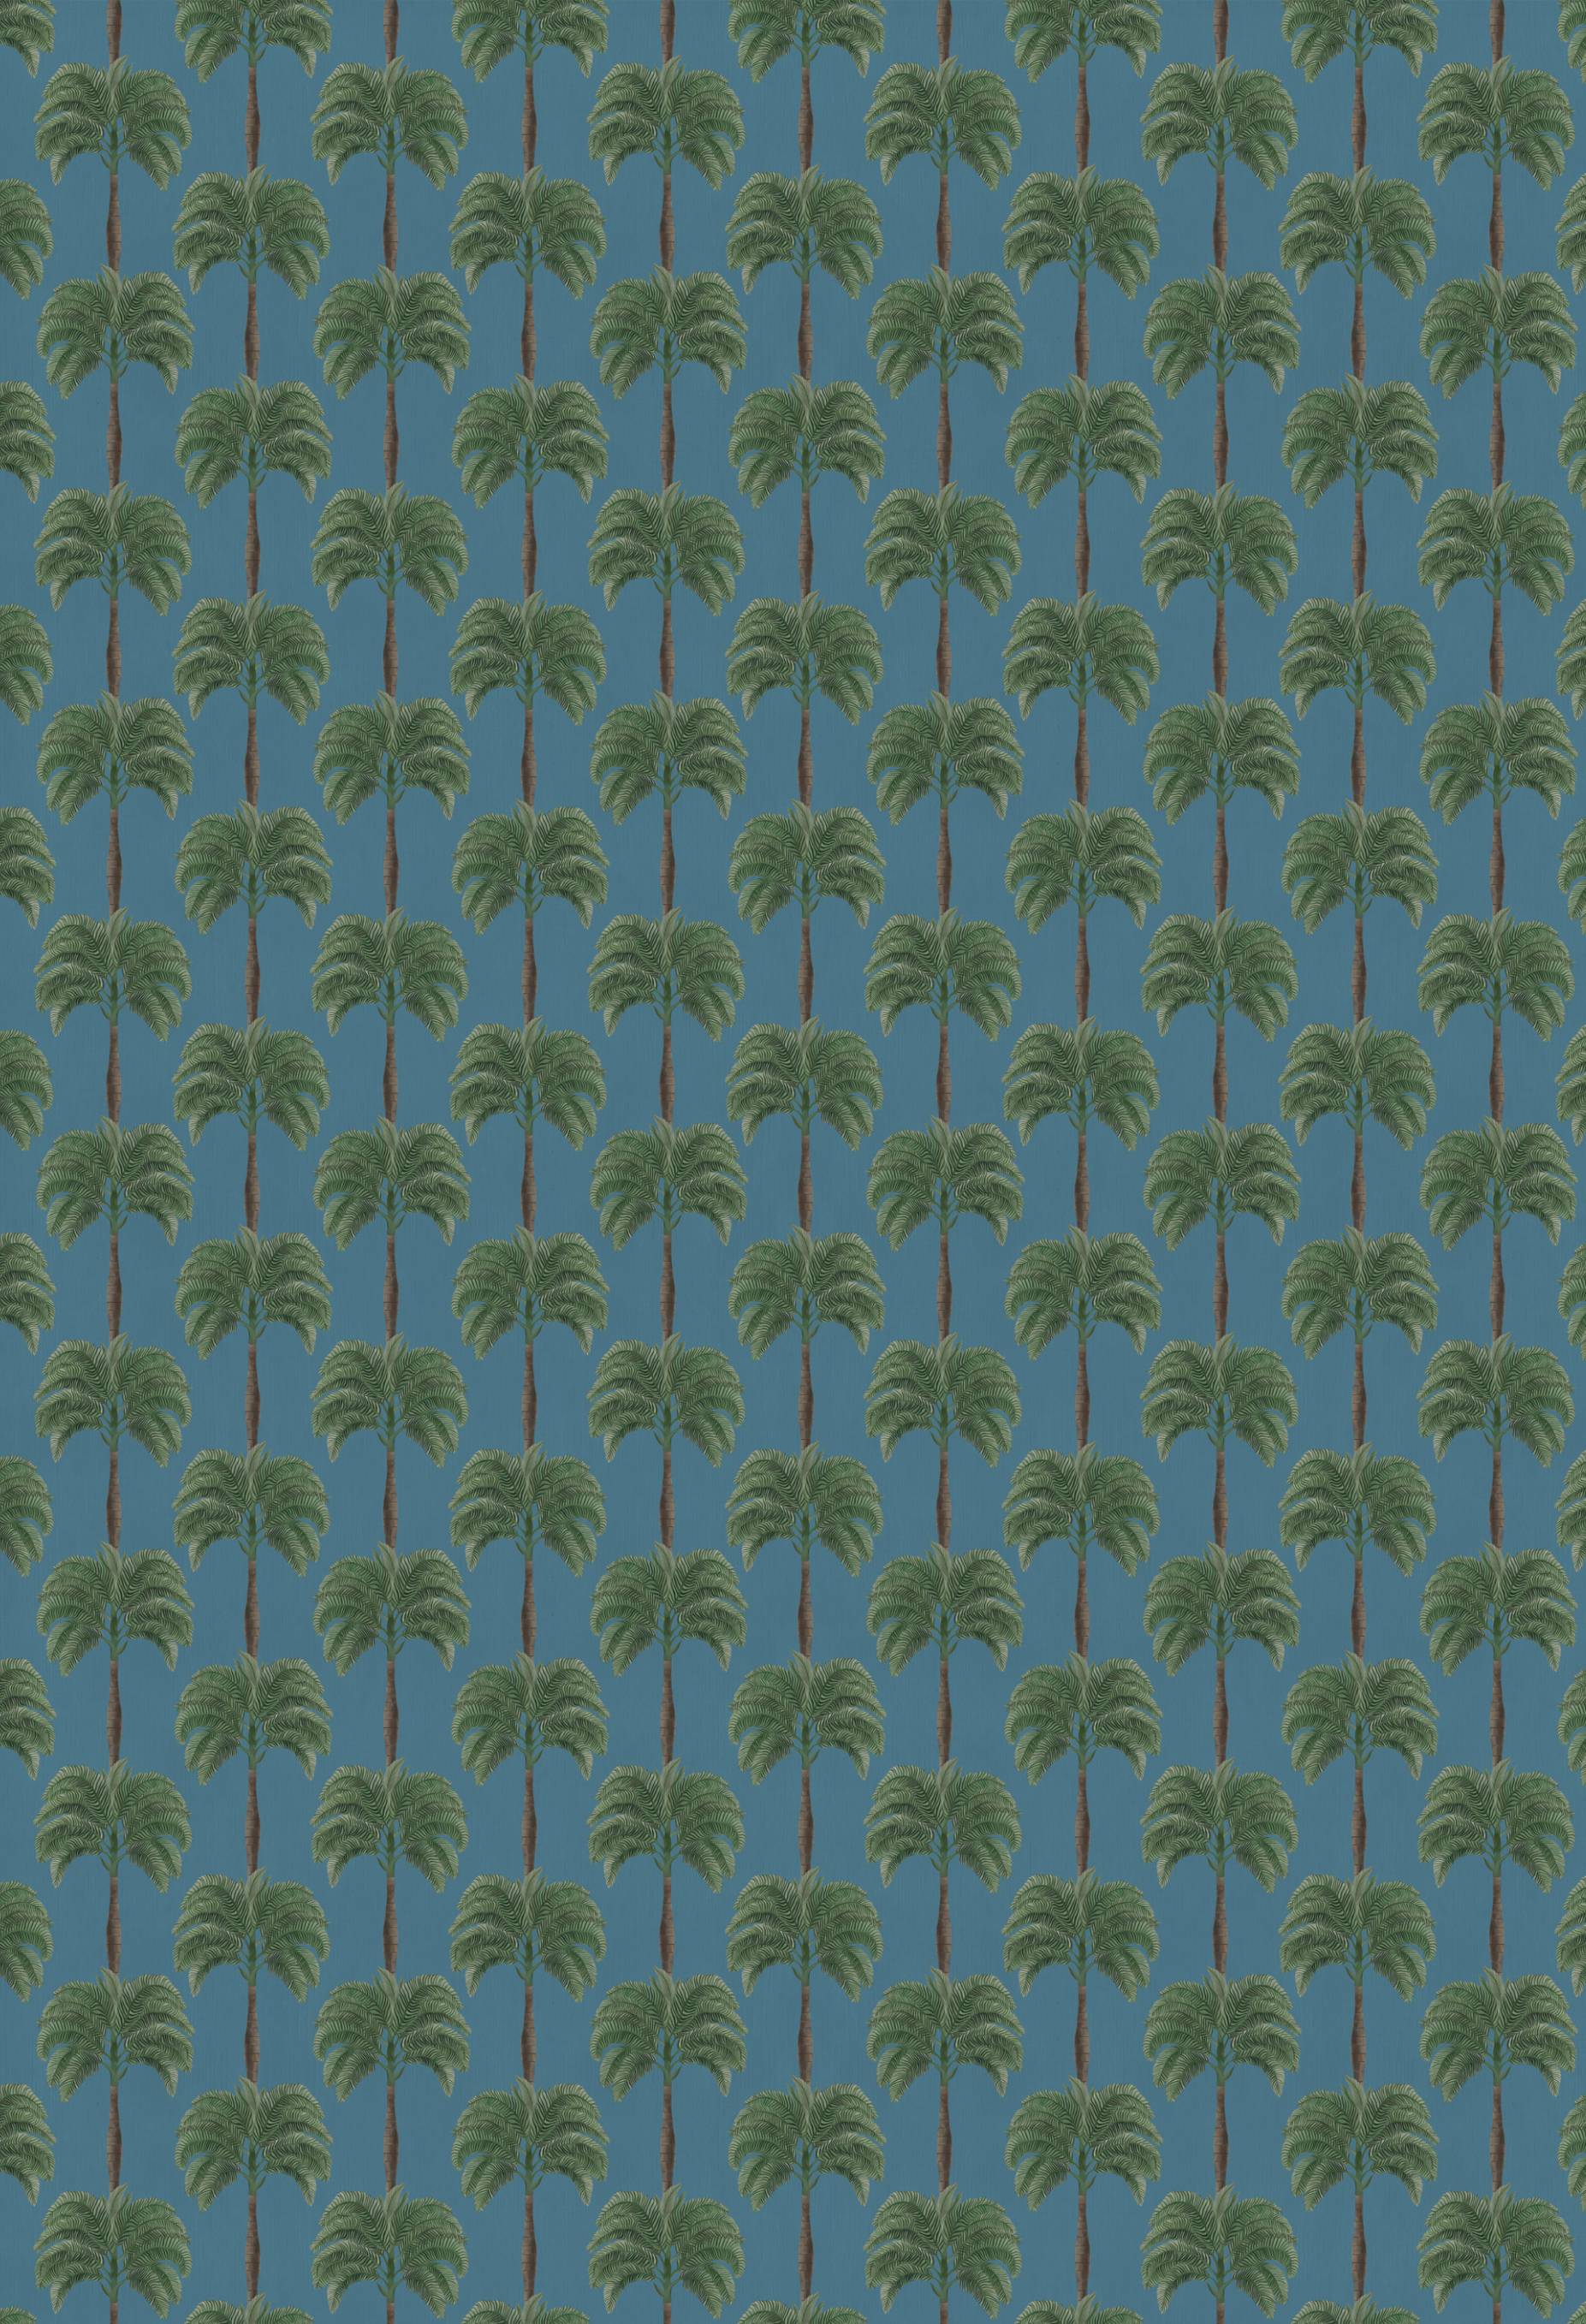 Little Palma Patterned Wallpaper on blue background by Deus ex Gardenia.